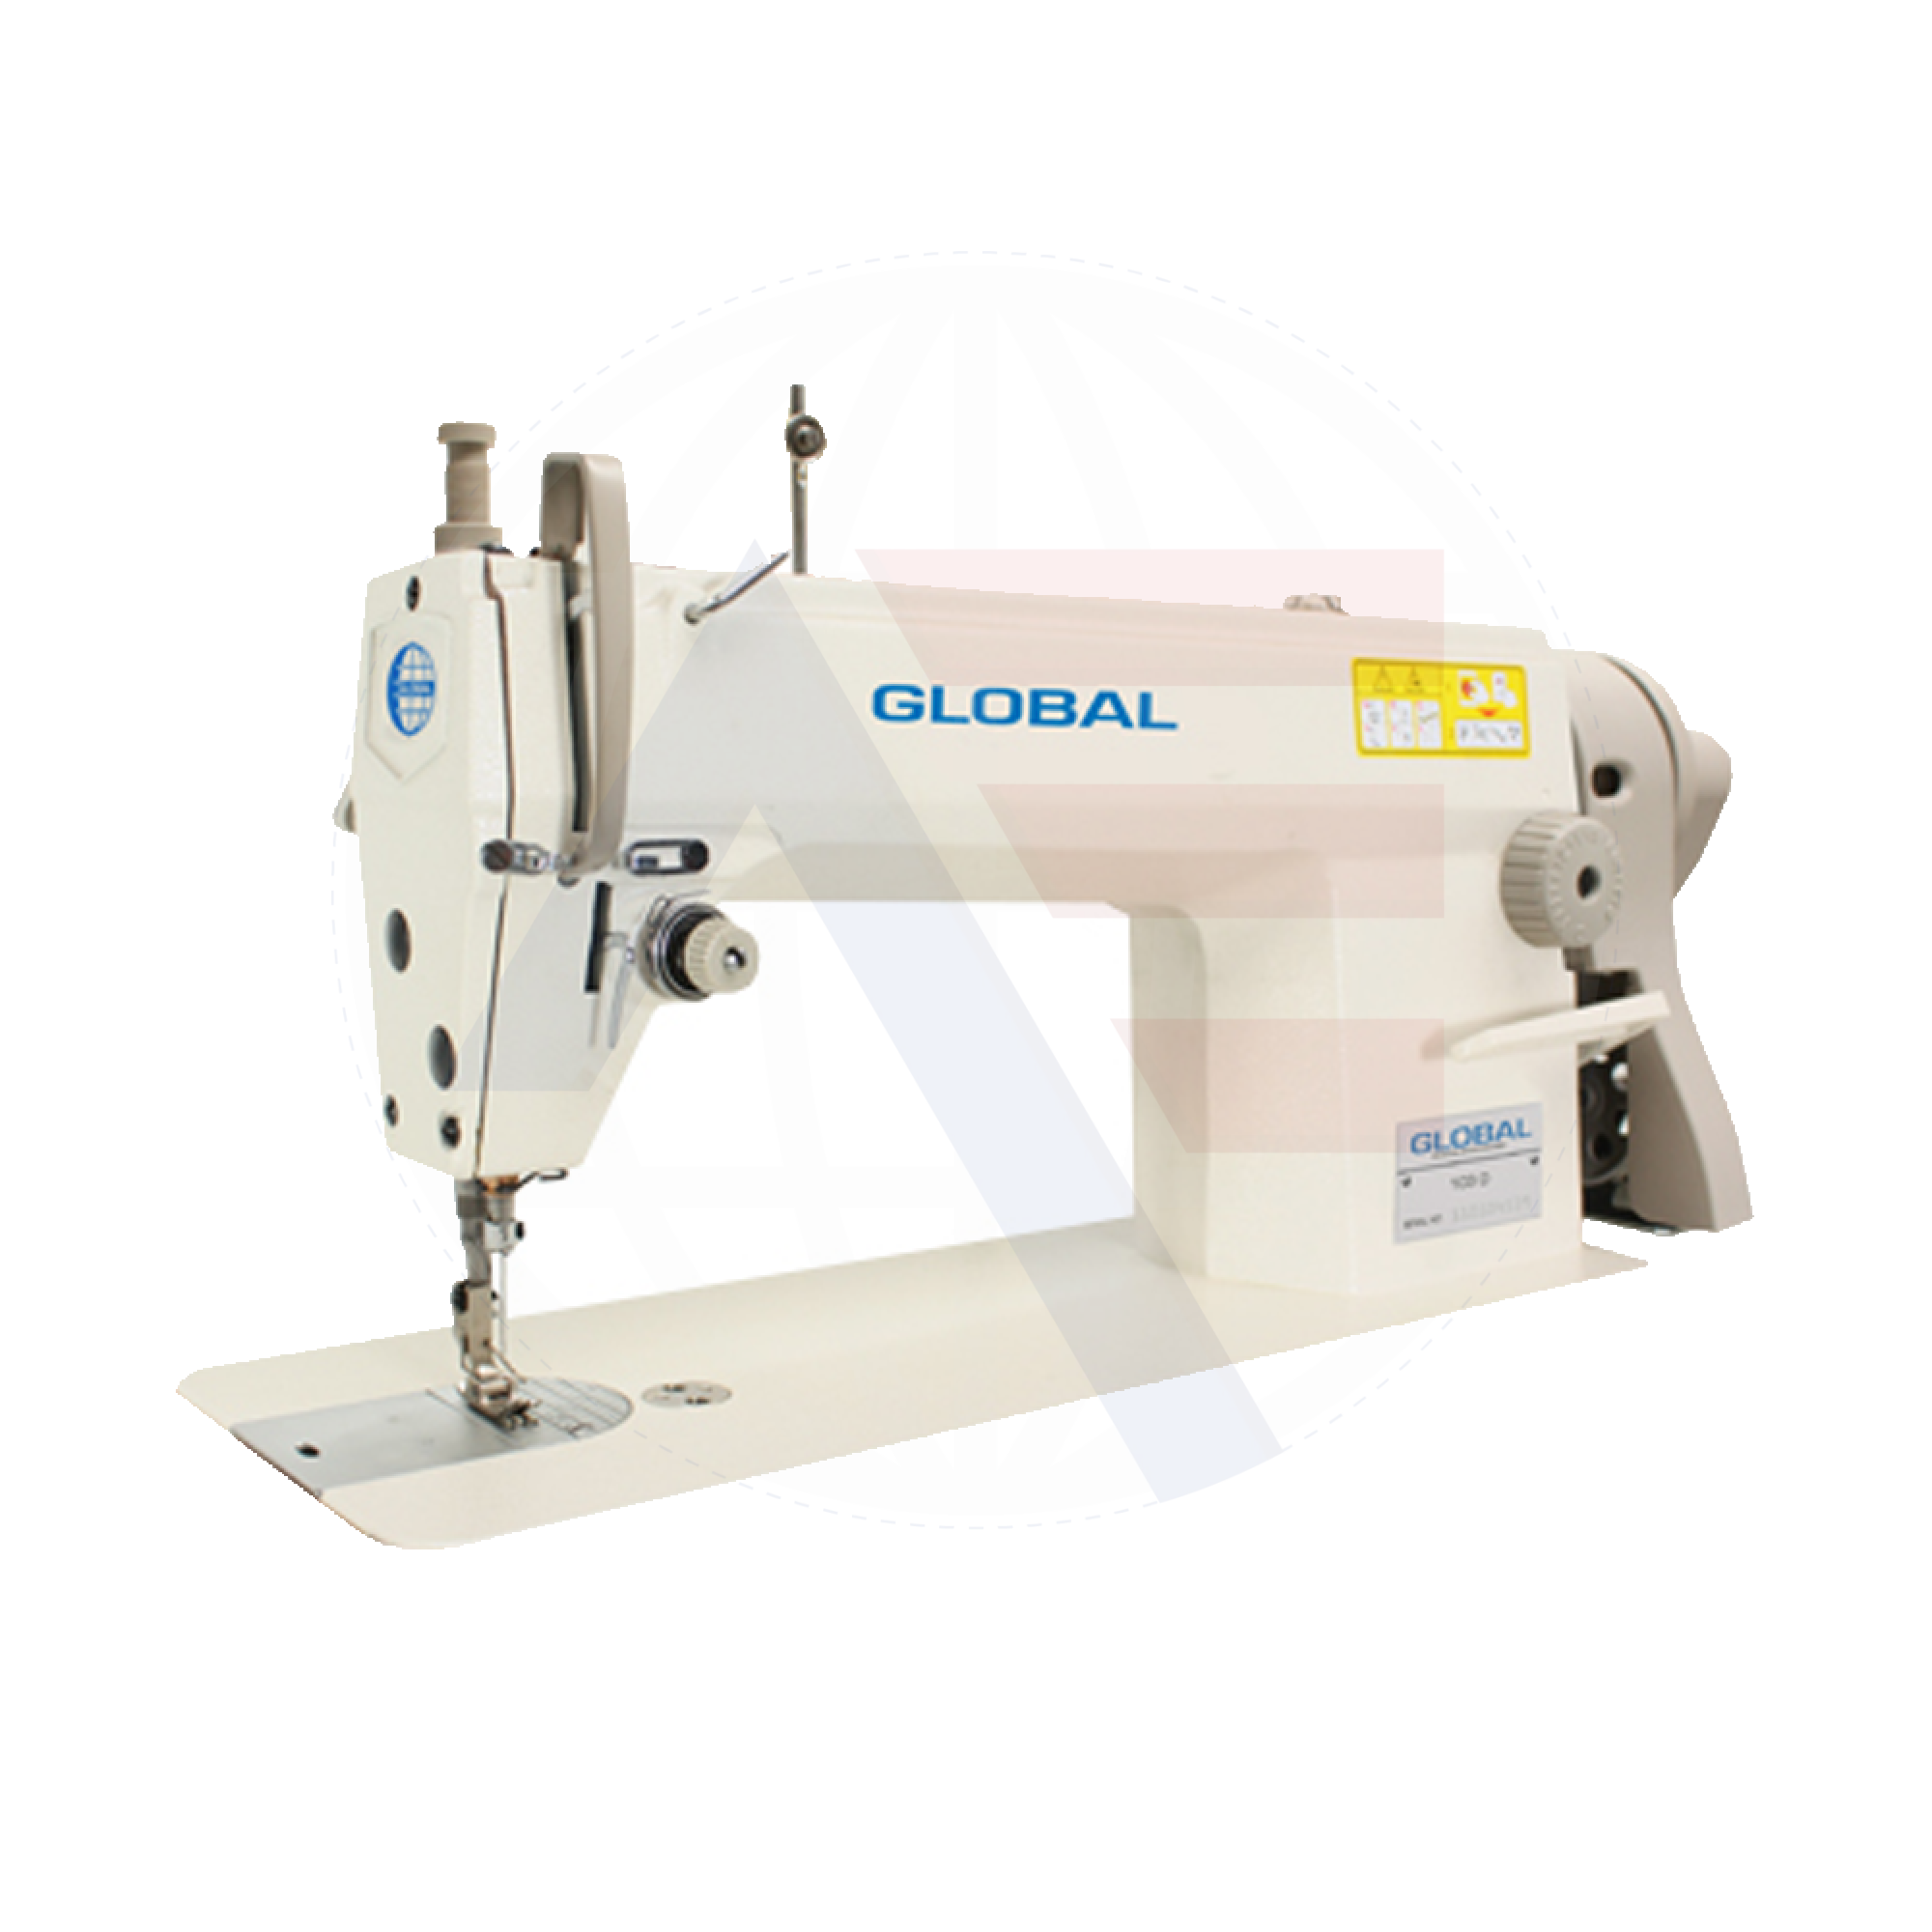 Global 103 D 1-Needle Lockstitch Machine Sewing Machines